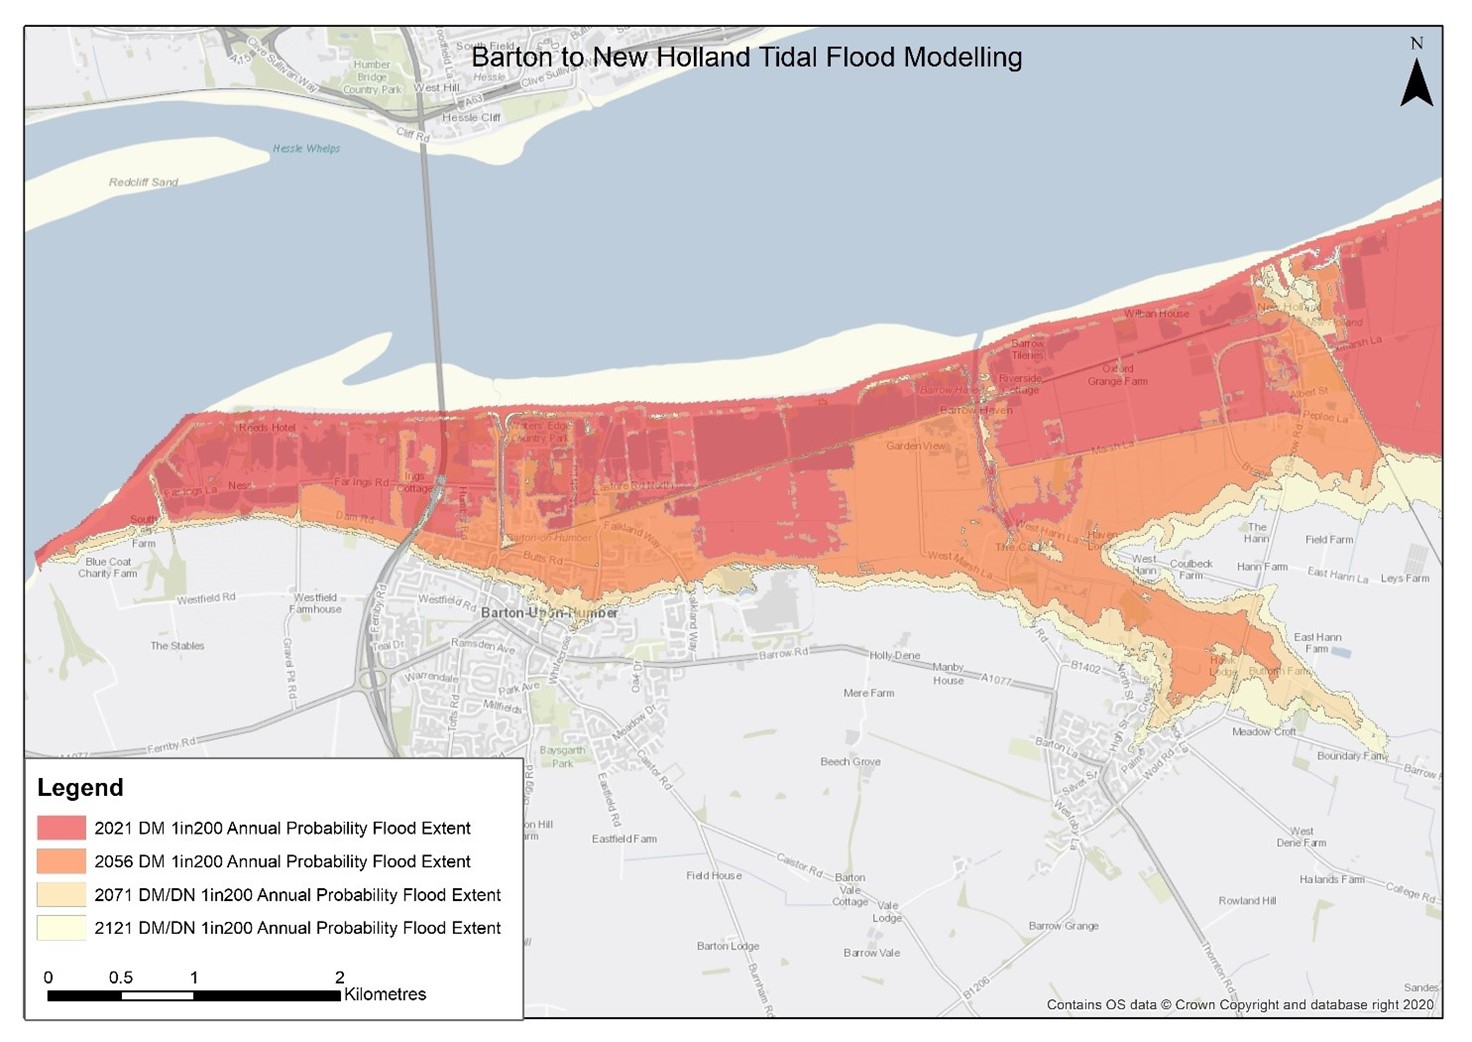 Flood Risk Map